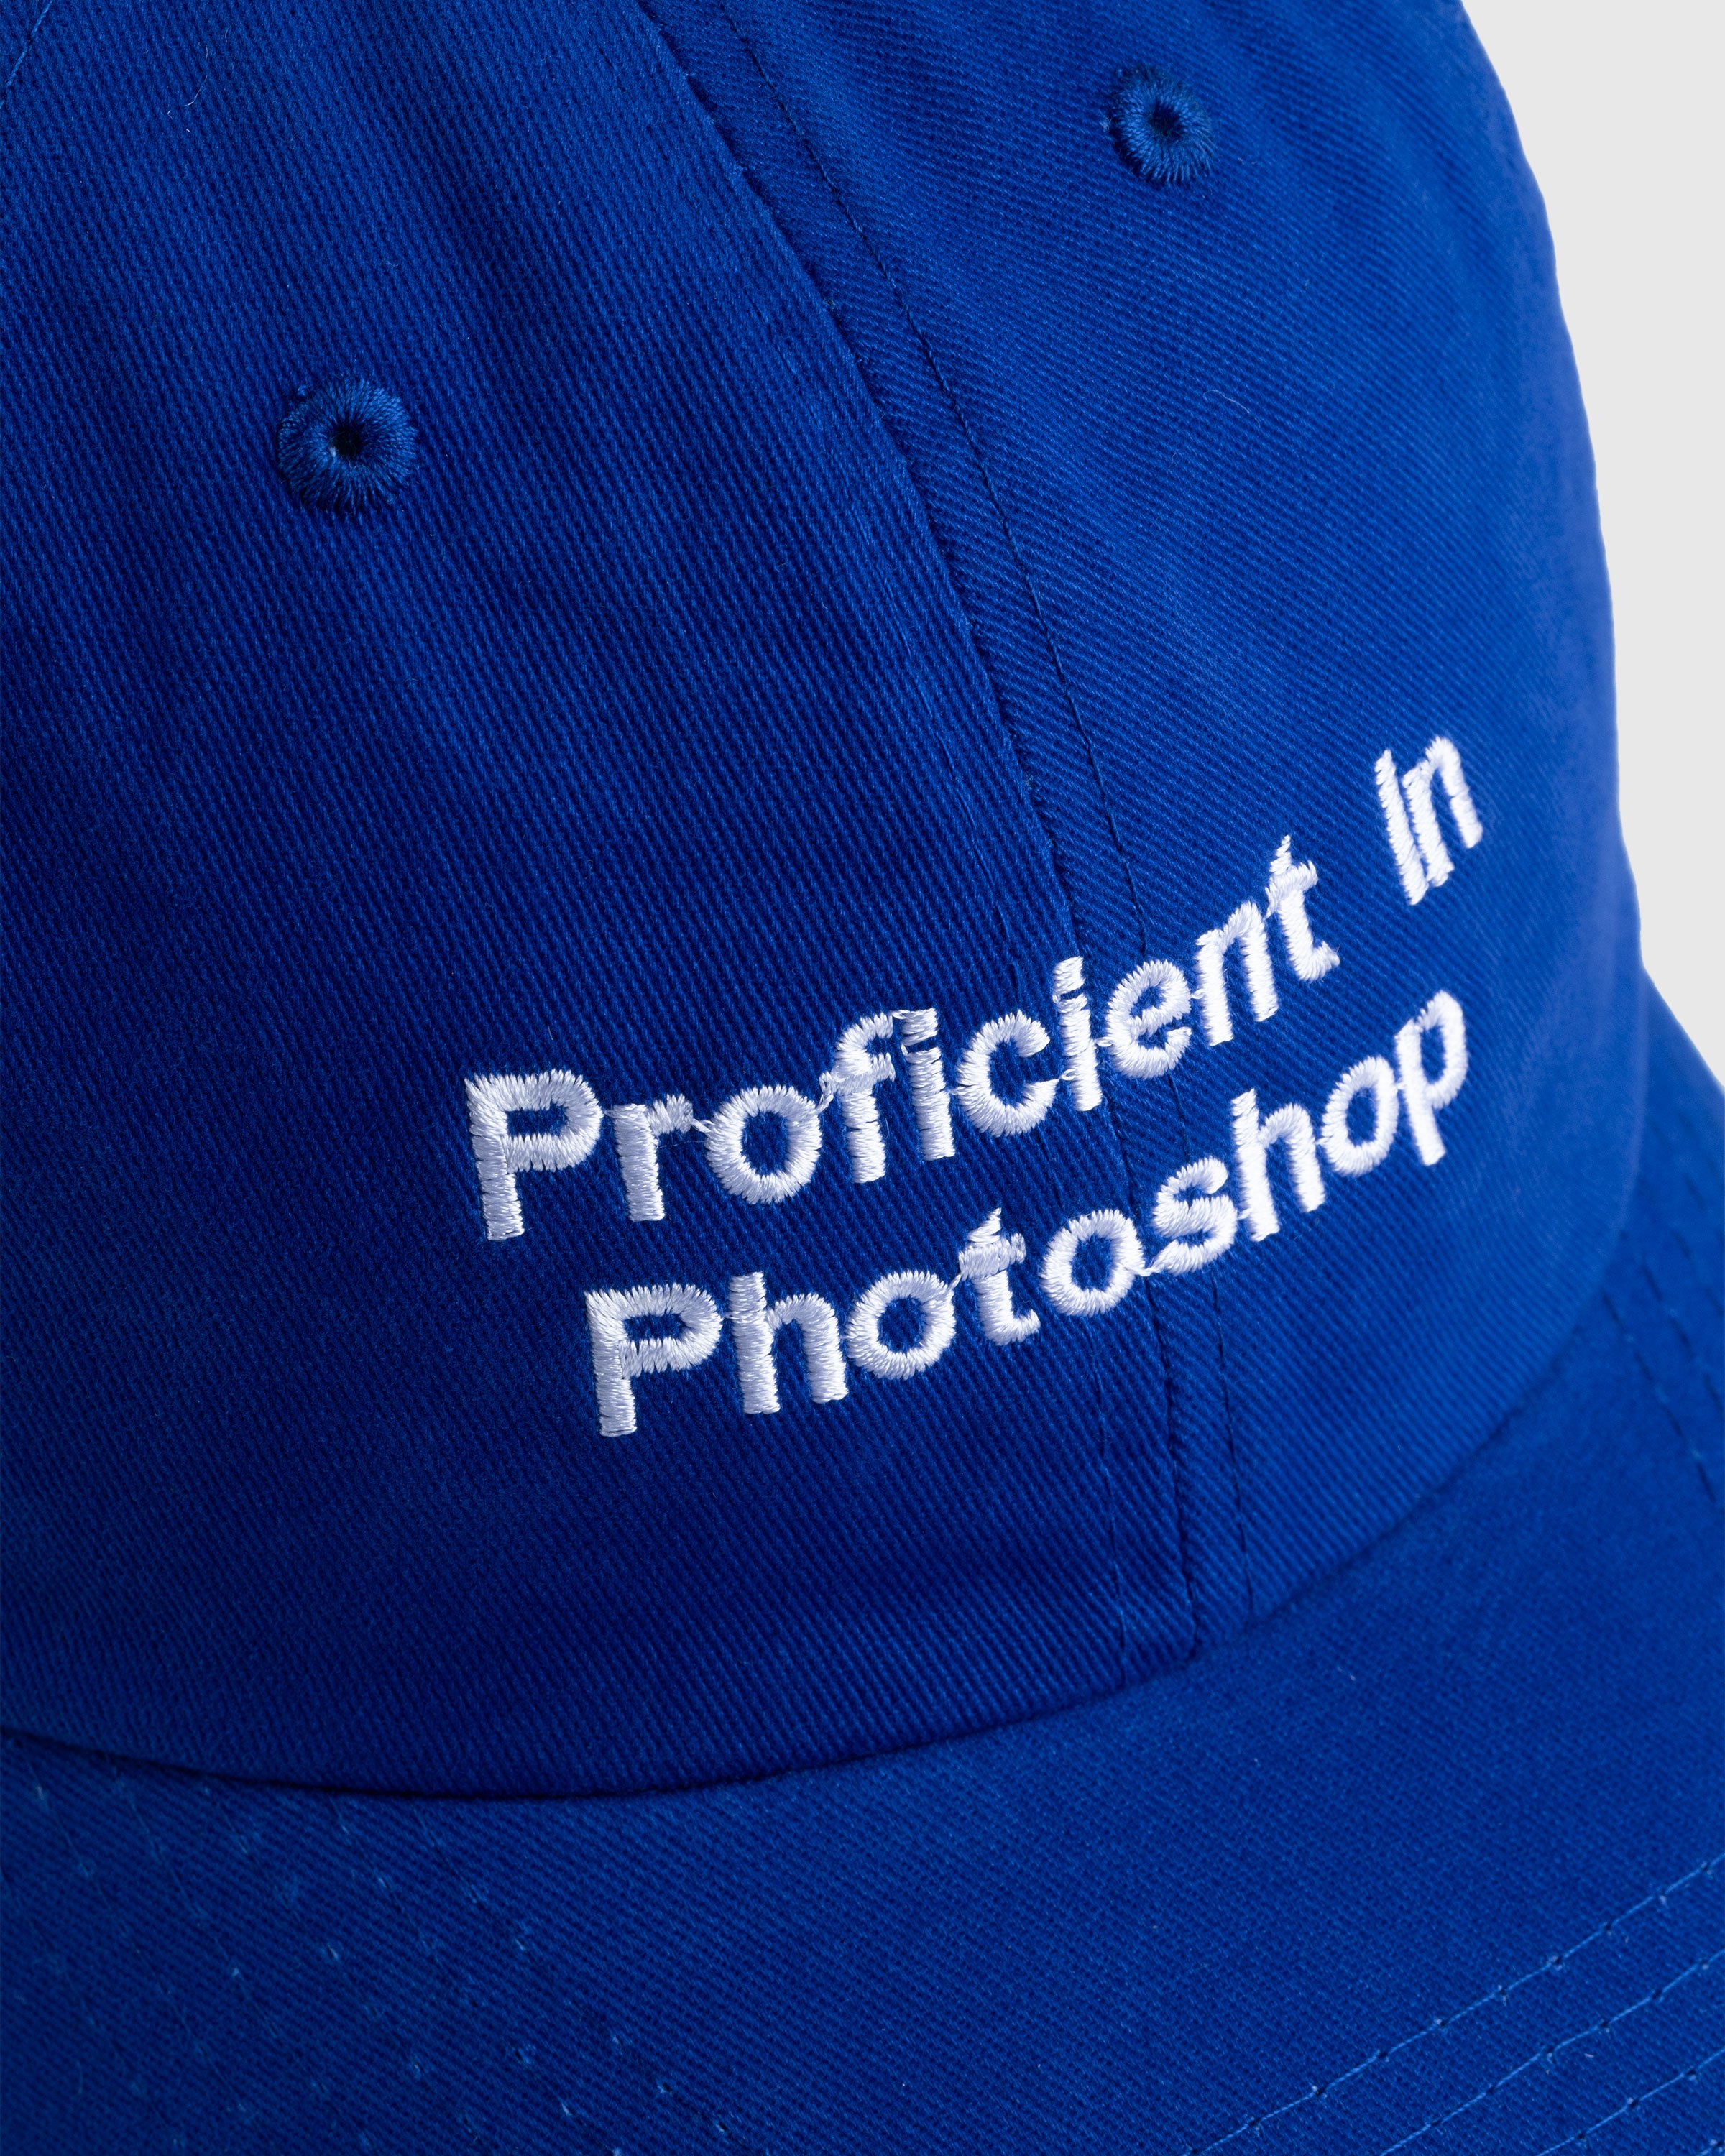 HO HO COCO - PROFICIENT IN PHOTOSHOP COBALT X WHITE - Accessories - Blue - Image 5